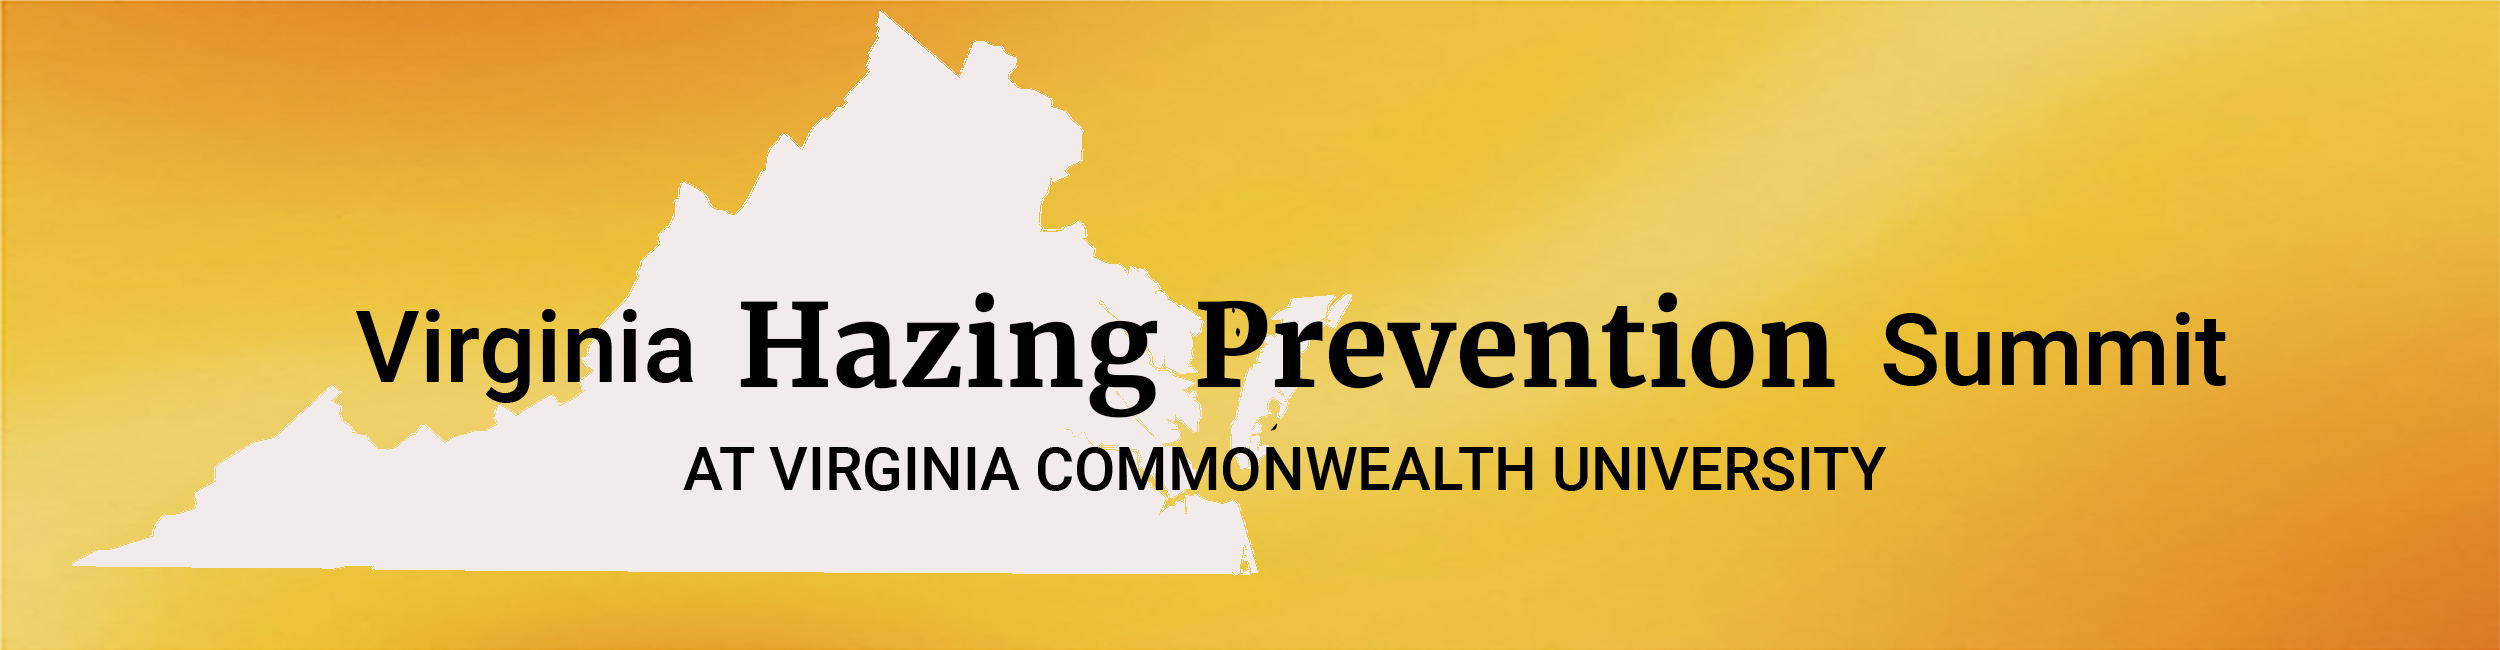 Virginia Hazing Prevention Summit Banner